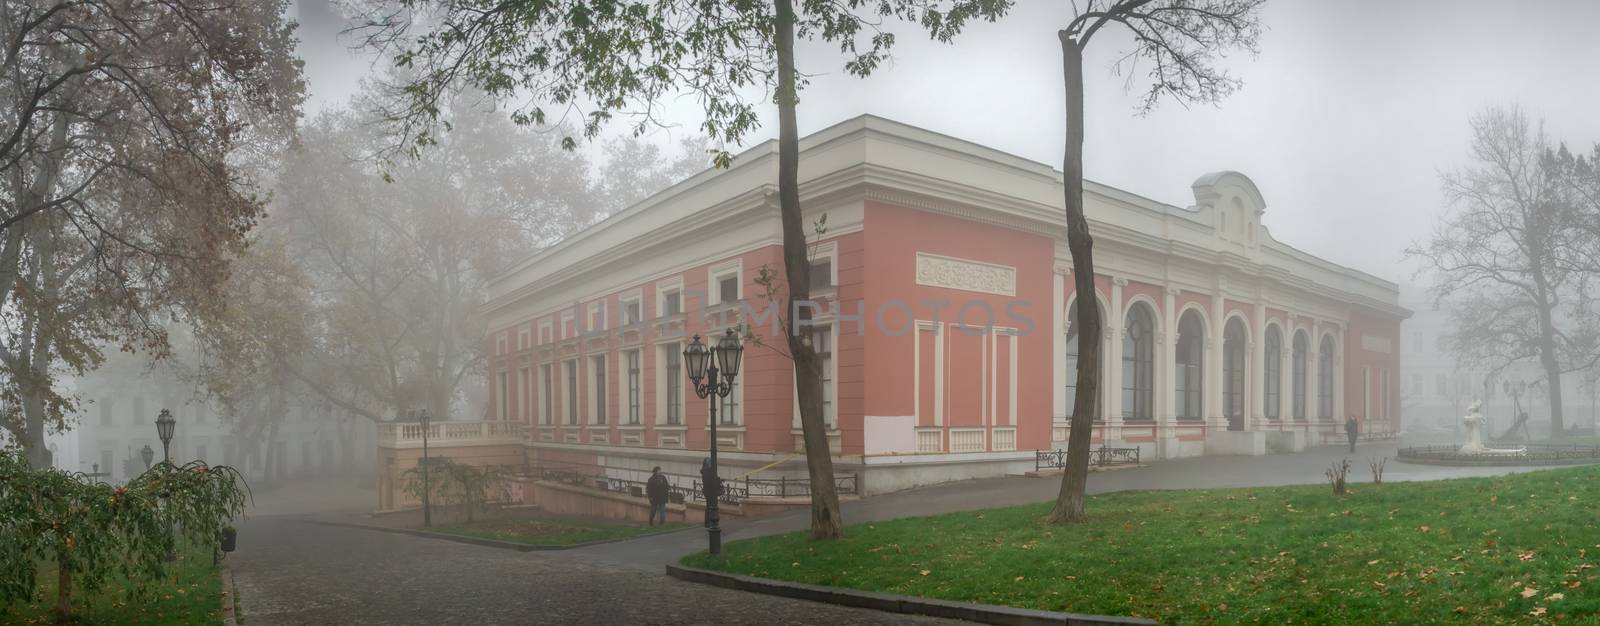 Odessa, Ukraine 11.28.2019.  Maritime Museum on Primorsky Boulevard in Odessa, Ukraine, on a foggy autumn day